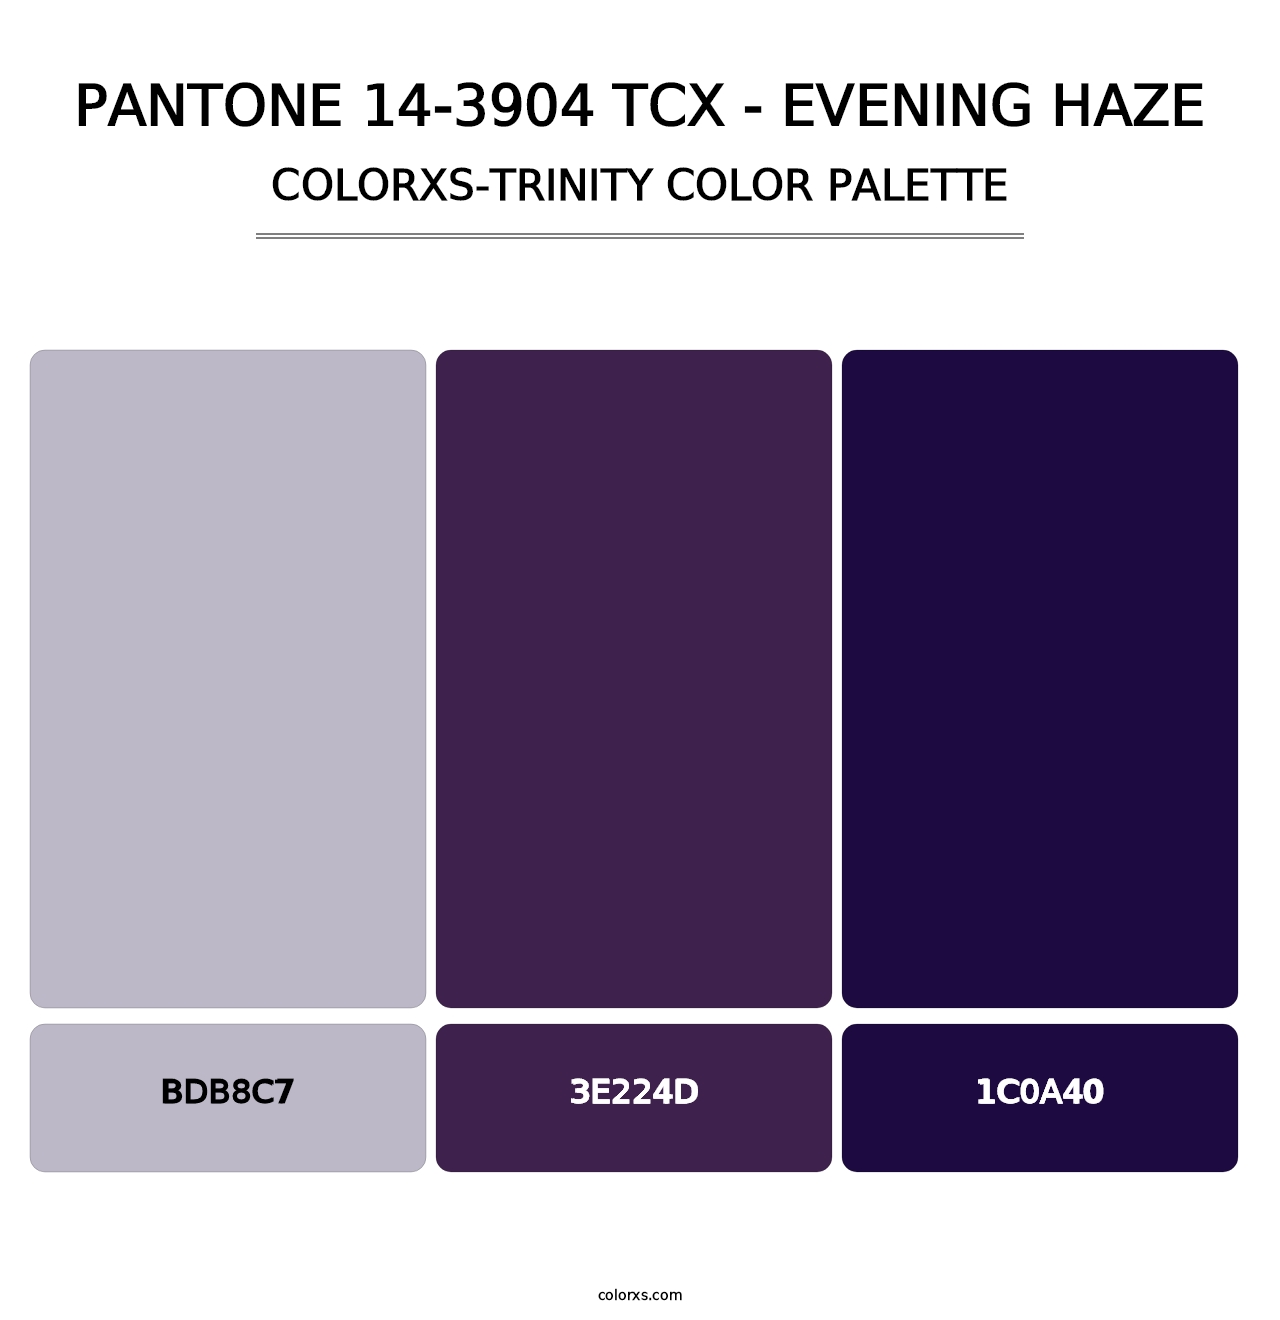 PANTONE 14-3904 TCX - Evening Haze - Colorxs Trinity Palette